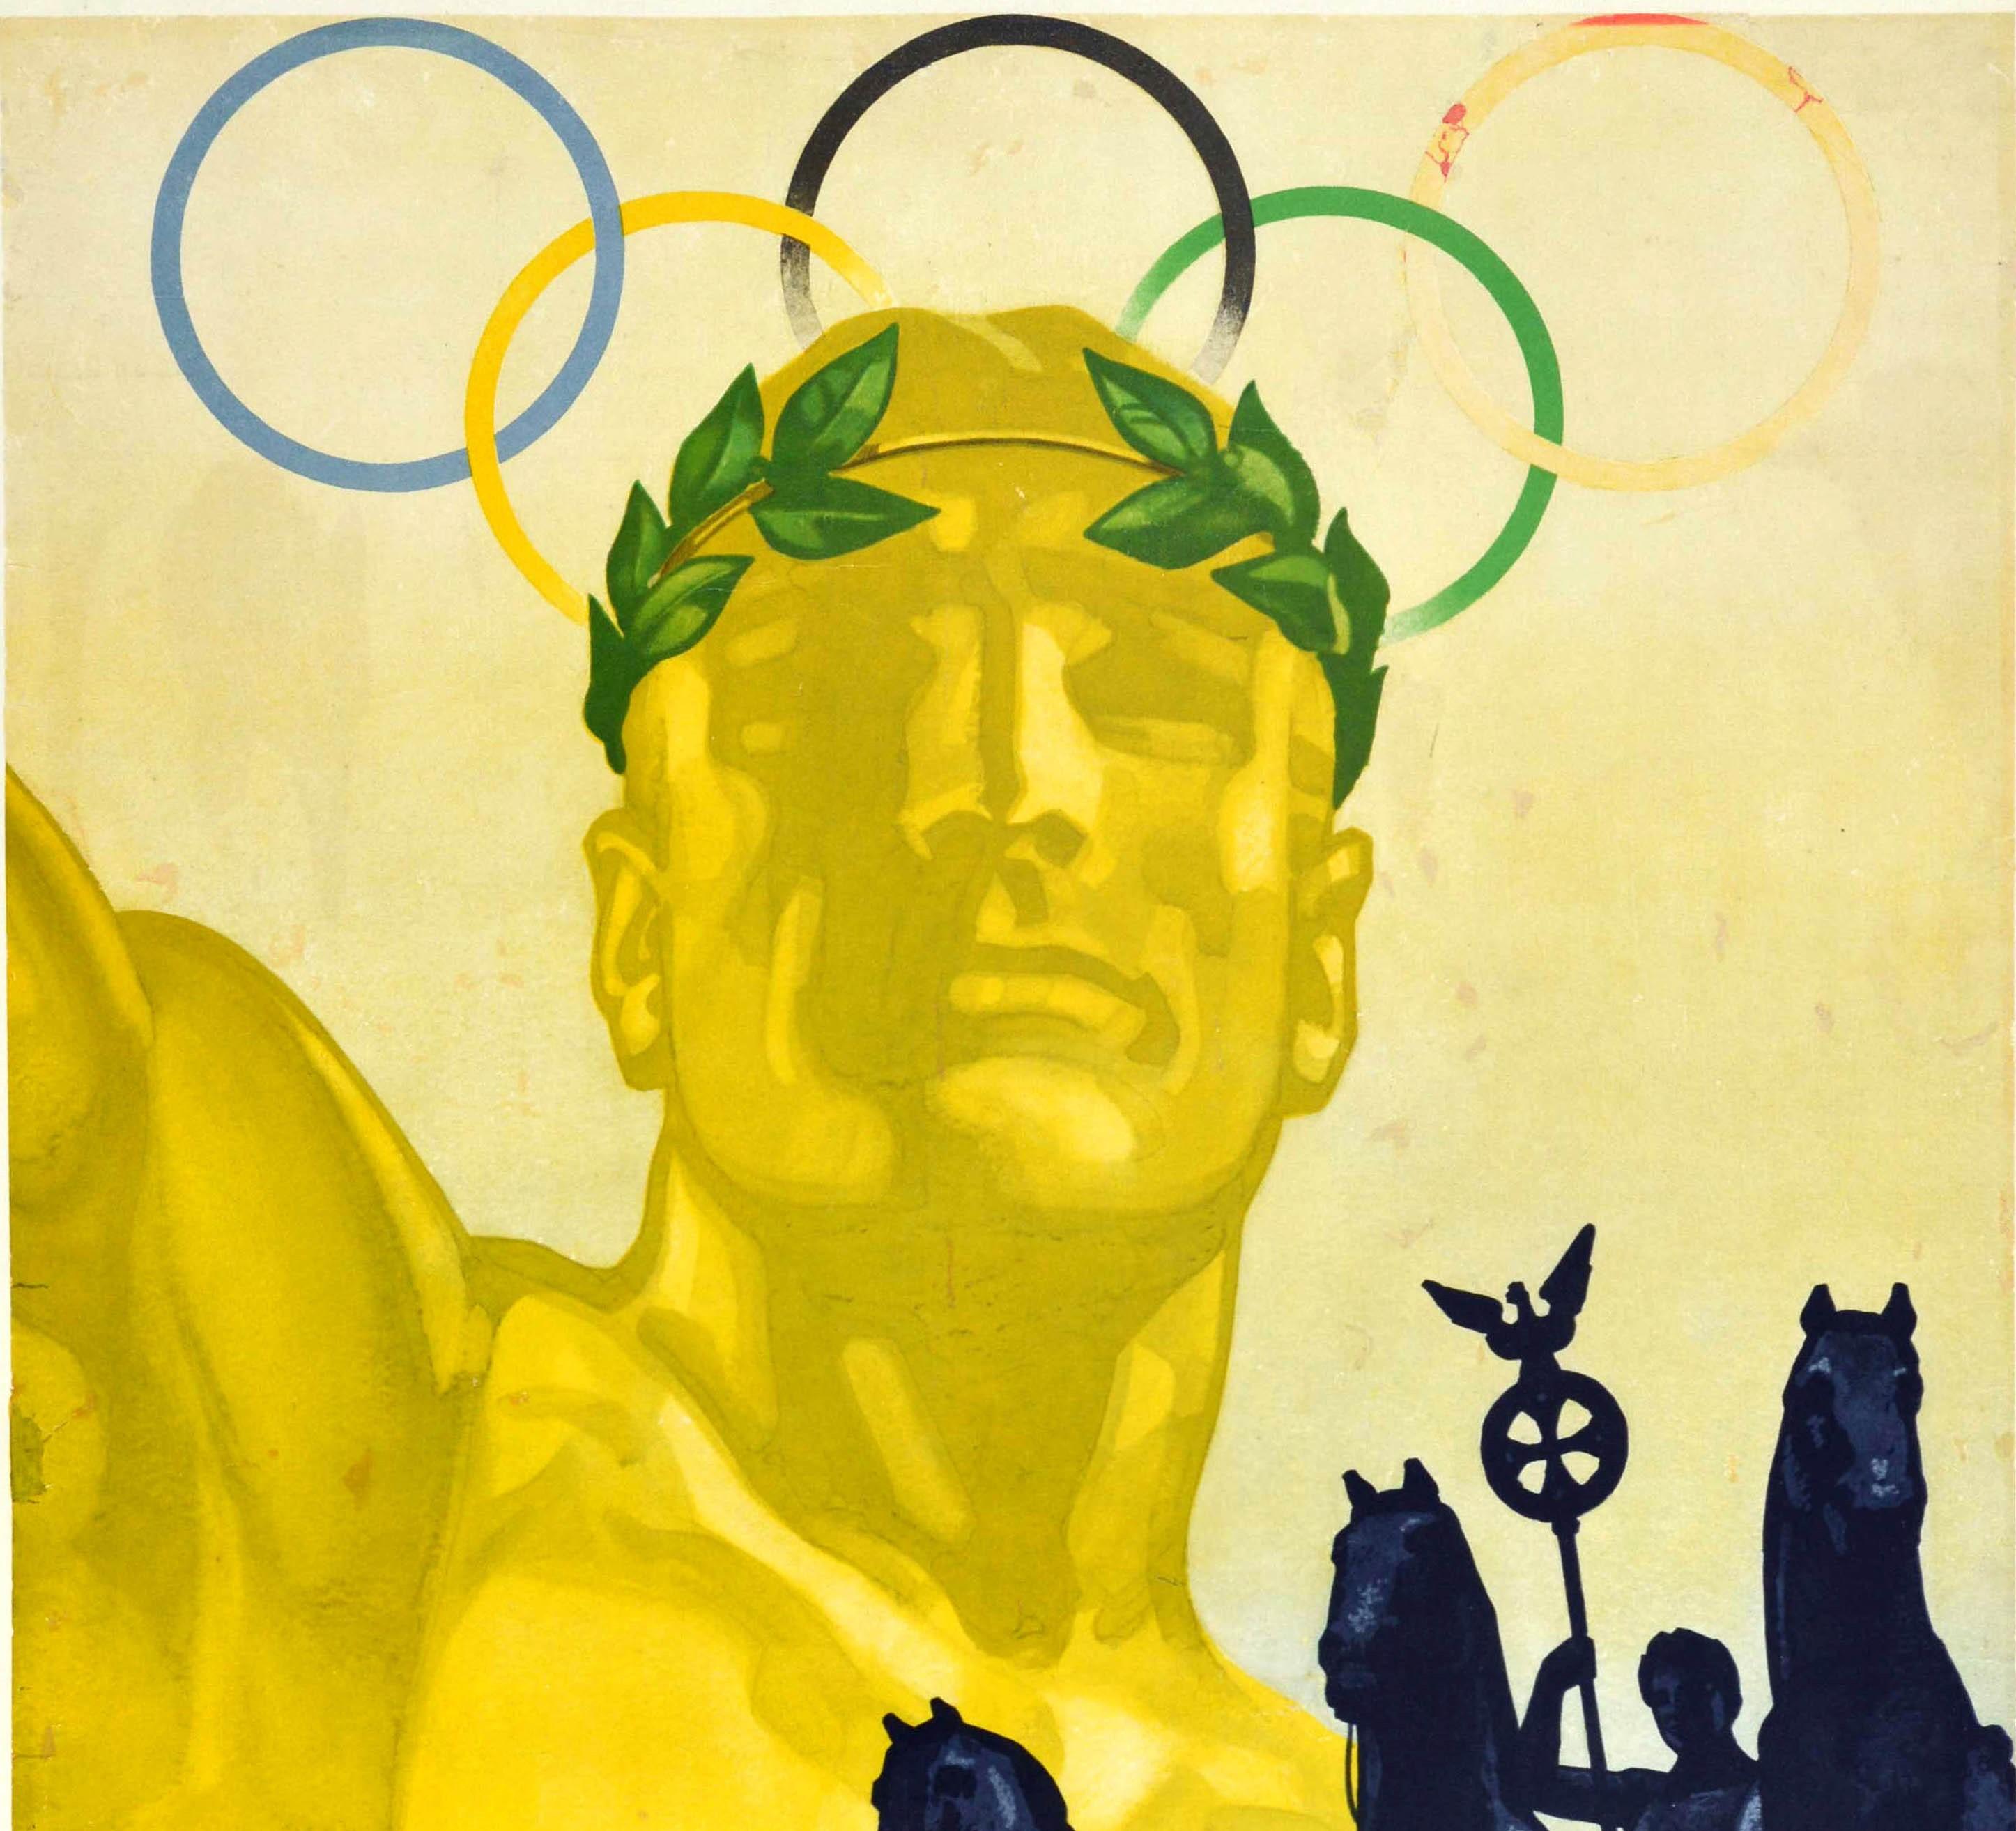 Original Vintage Sport Poster 1936 Olympic Games Berlin Germany Brandenburg Gate - Print by Franz Würbel